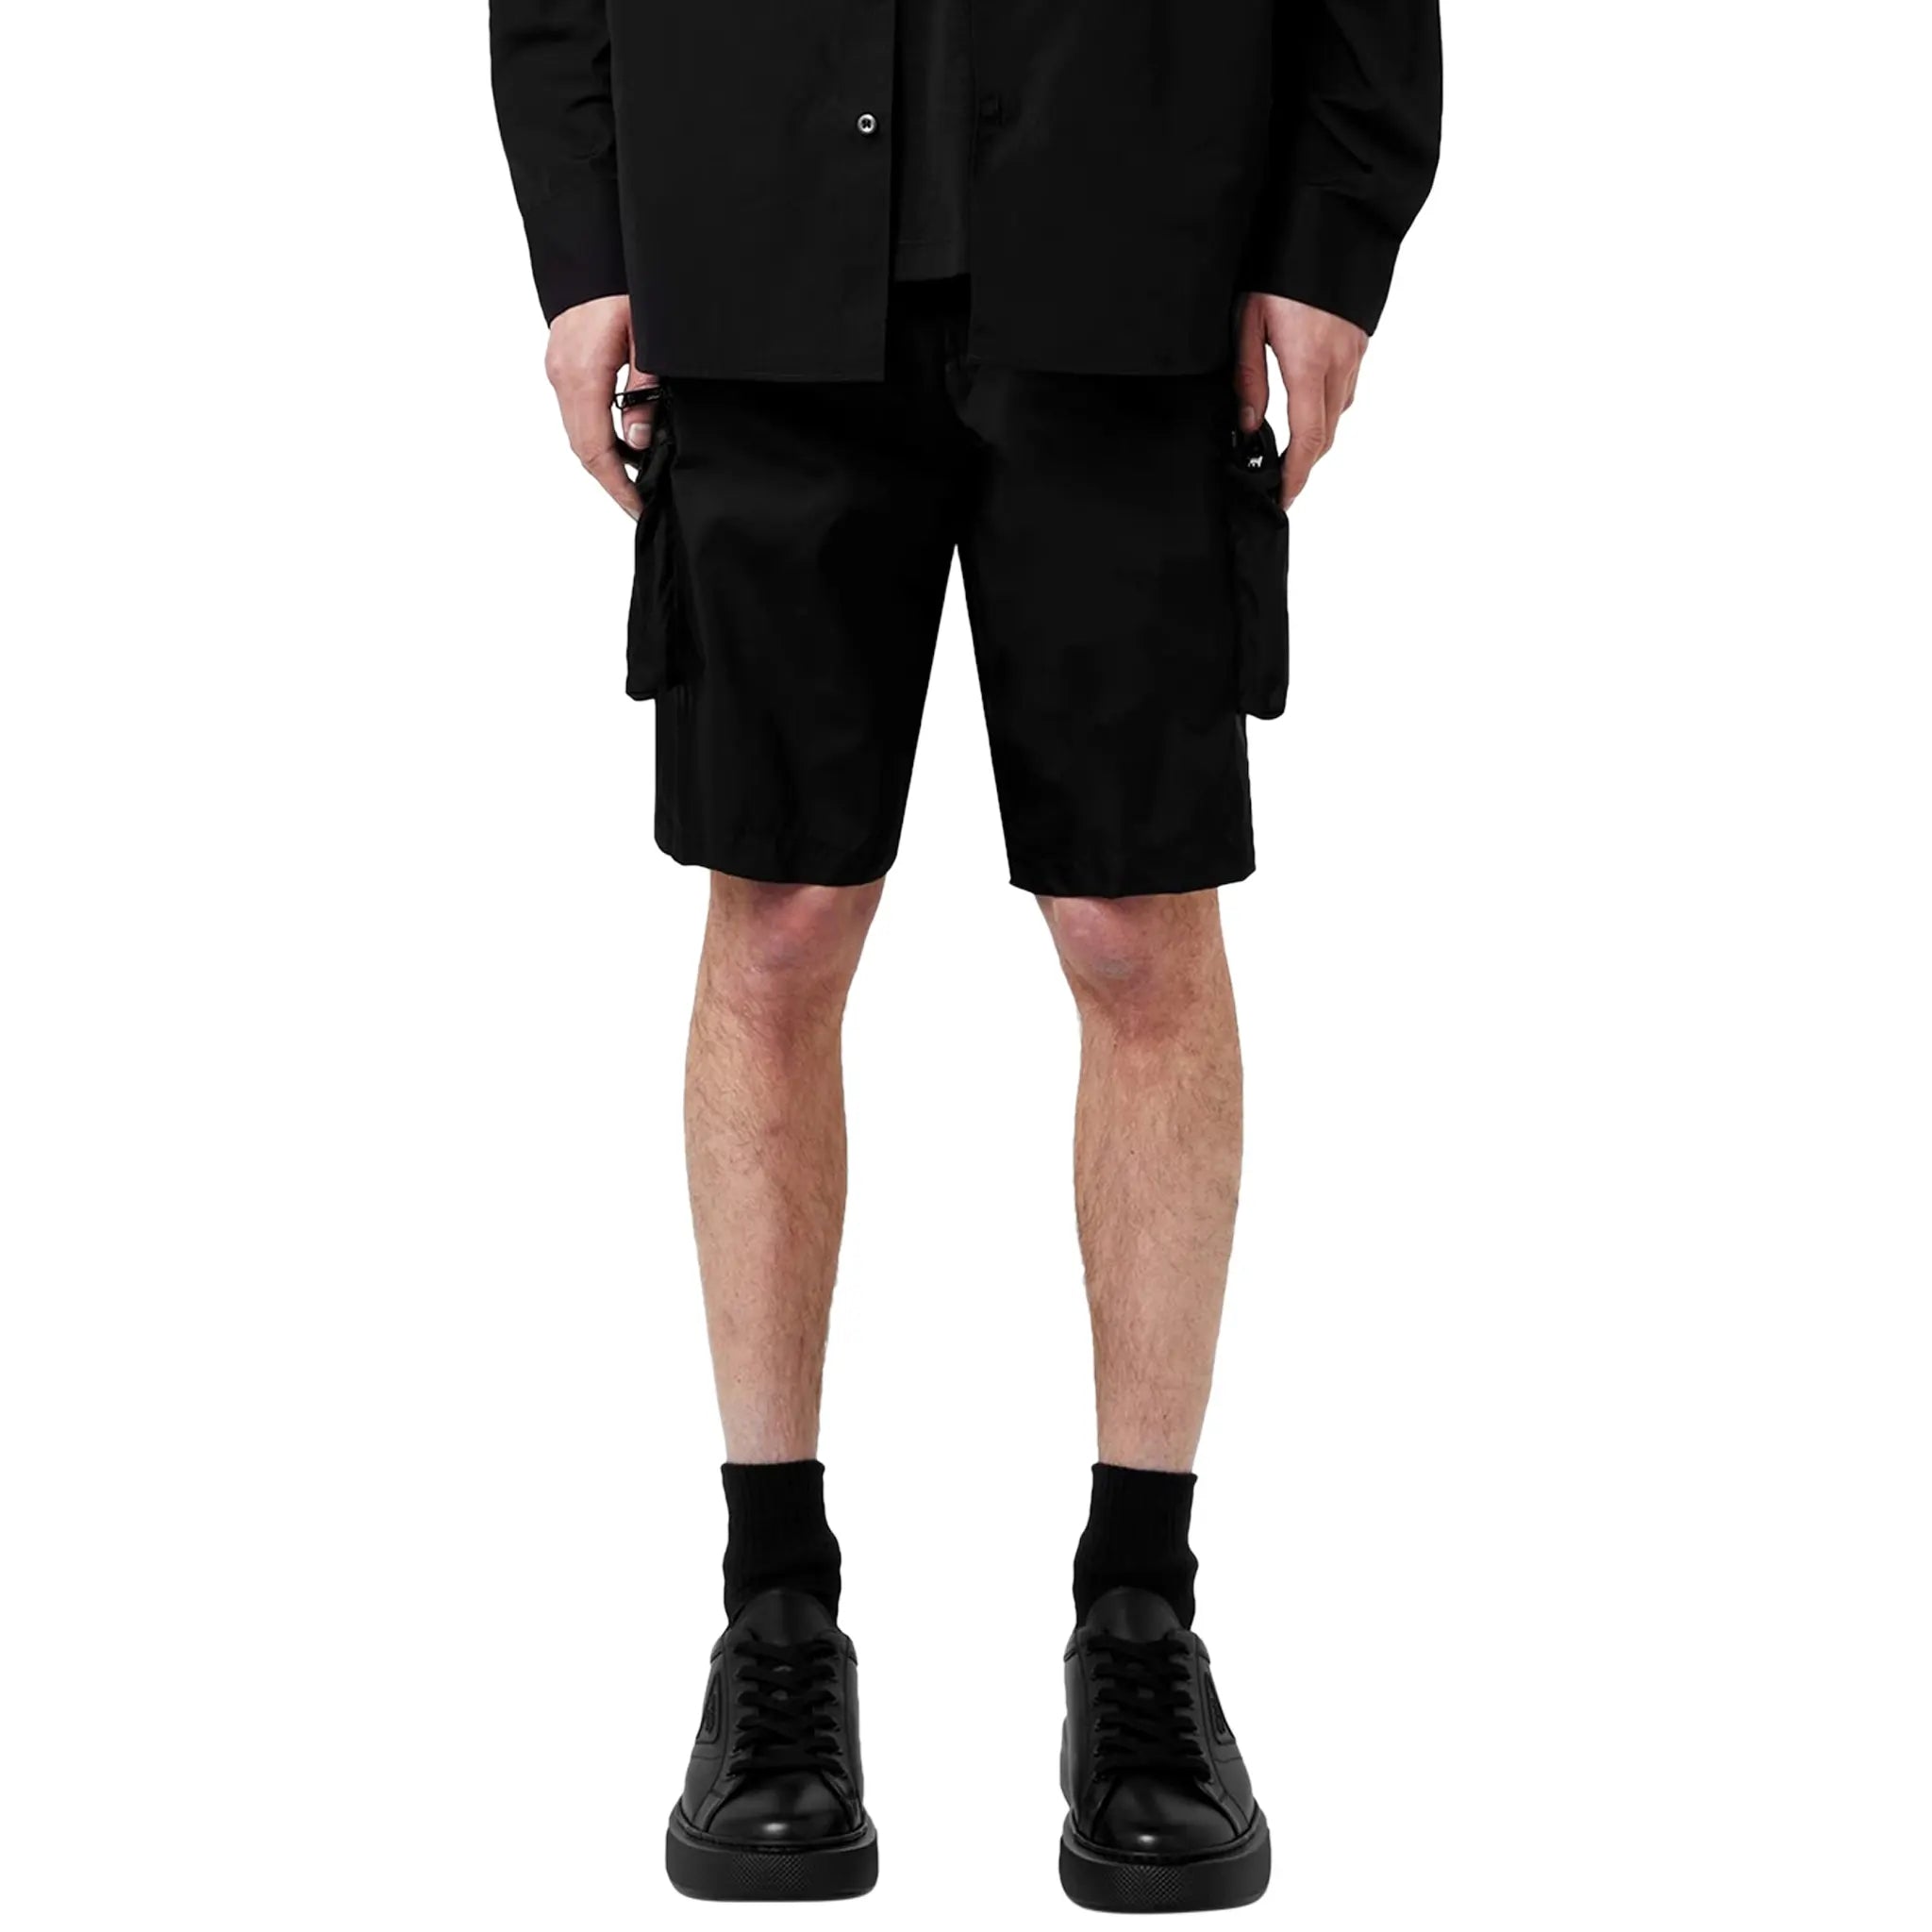 Front Detail view of Prada Bermudas Nylon Black Shorts SPH393_1WQ8_F0002_S_OOO